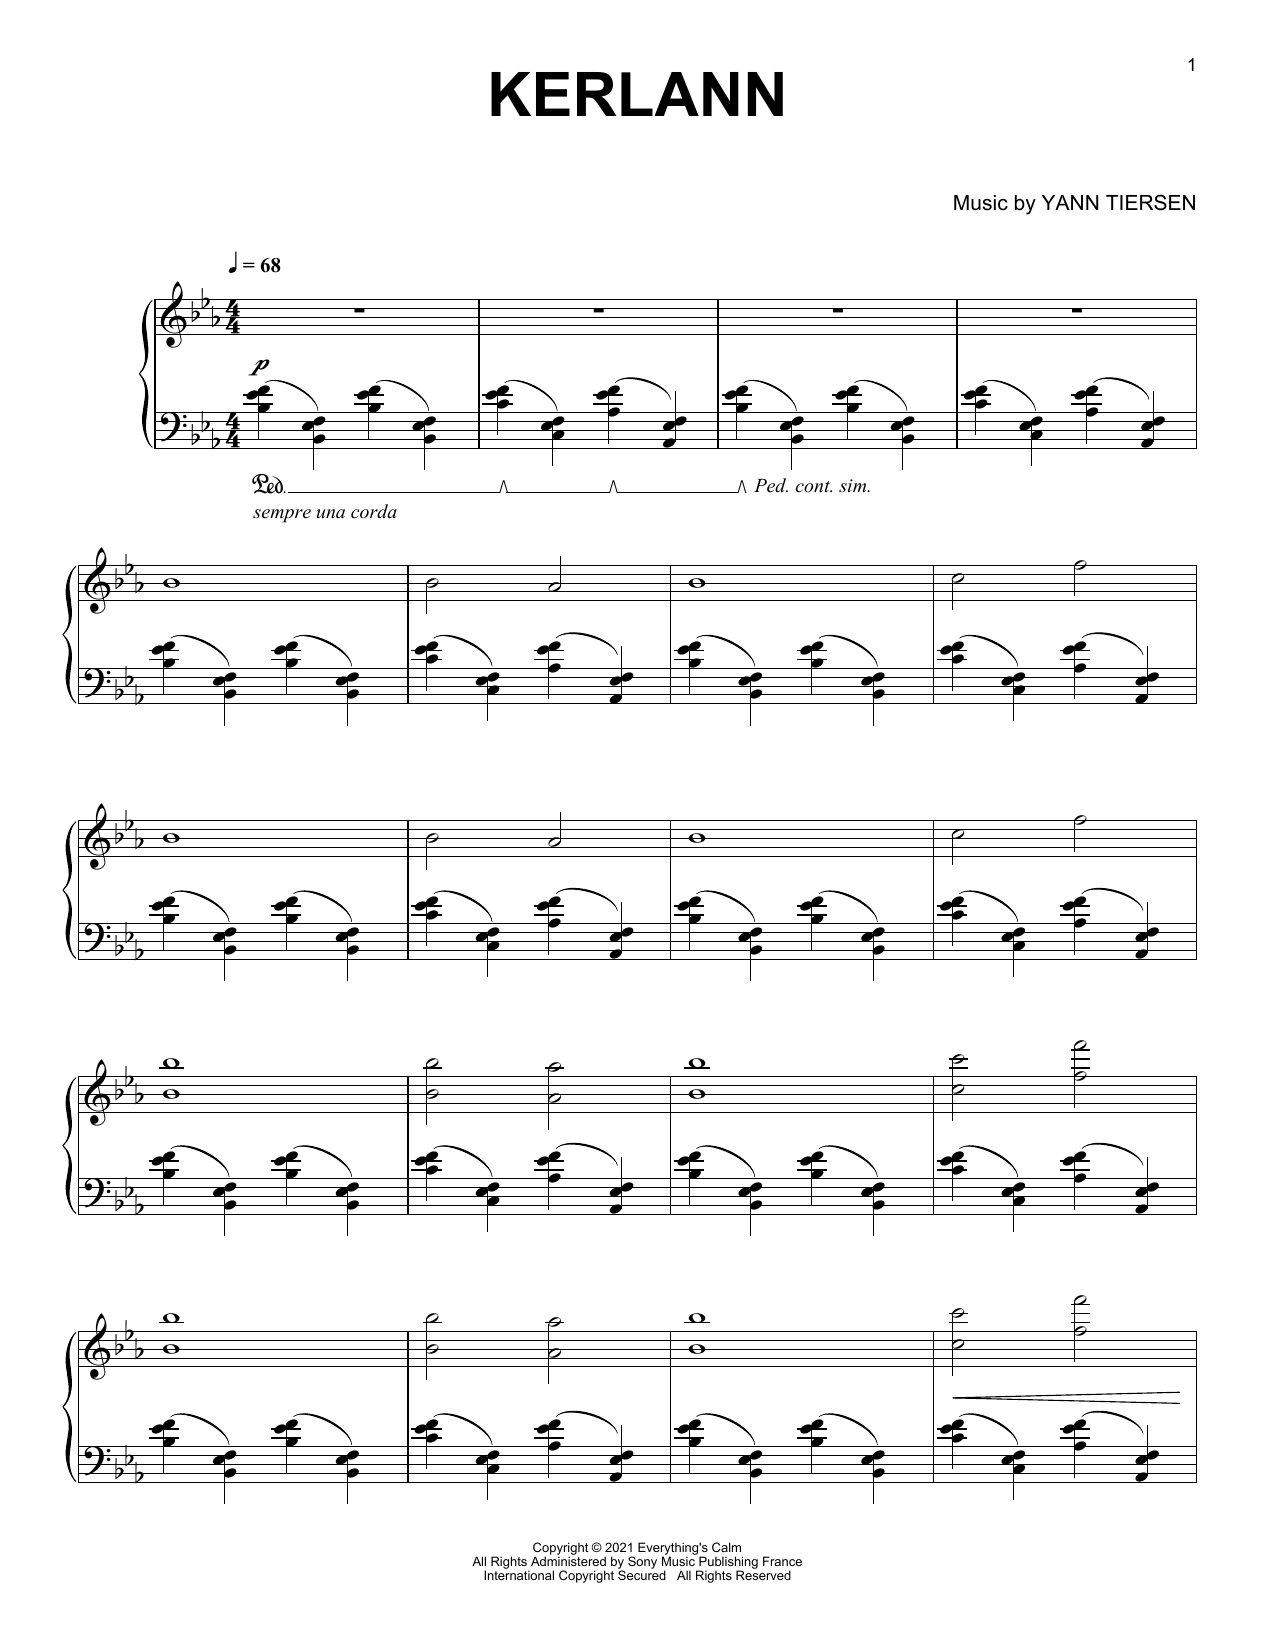 Download Yann Tiersen Kerlann Sheet Music and learn how to play Piano Solo PDF digital score in minutes